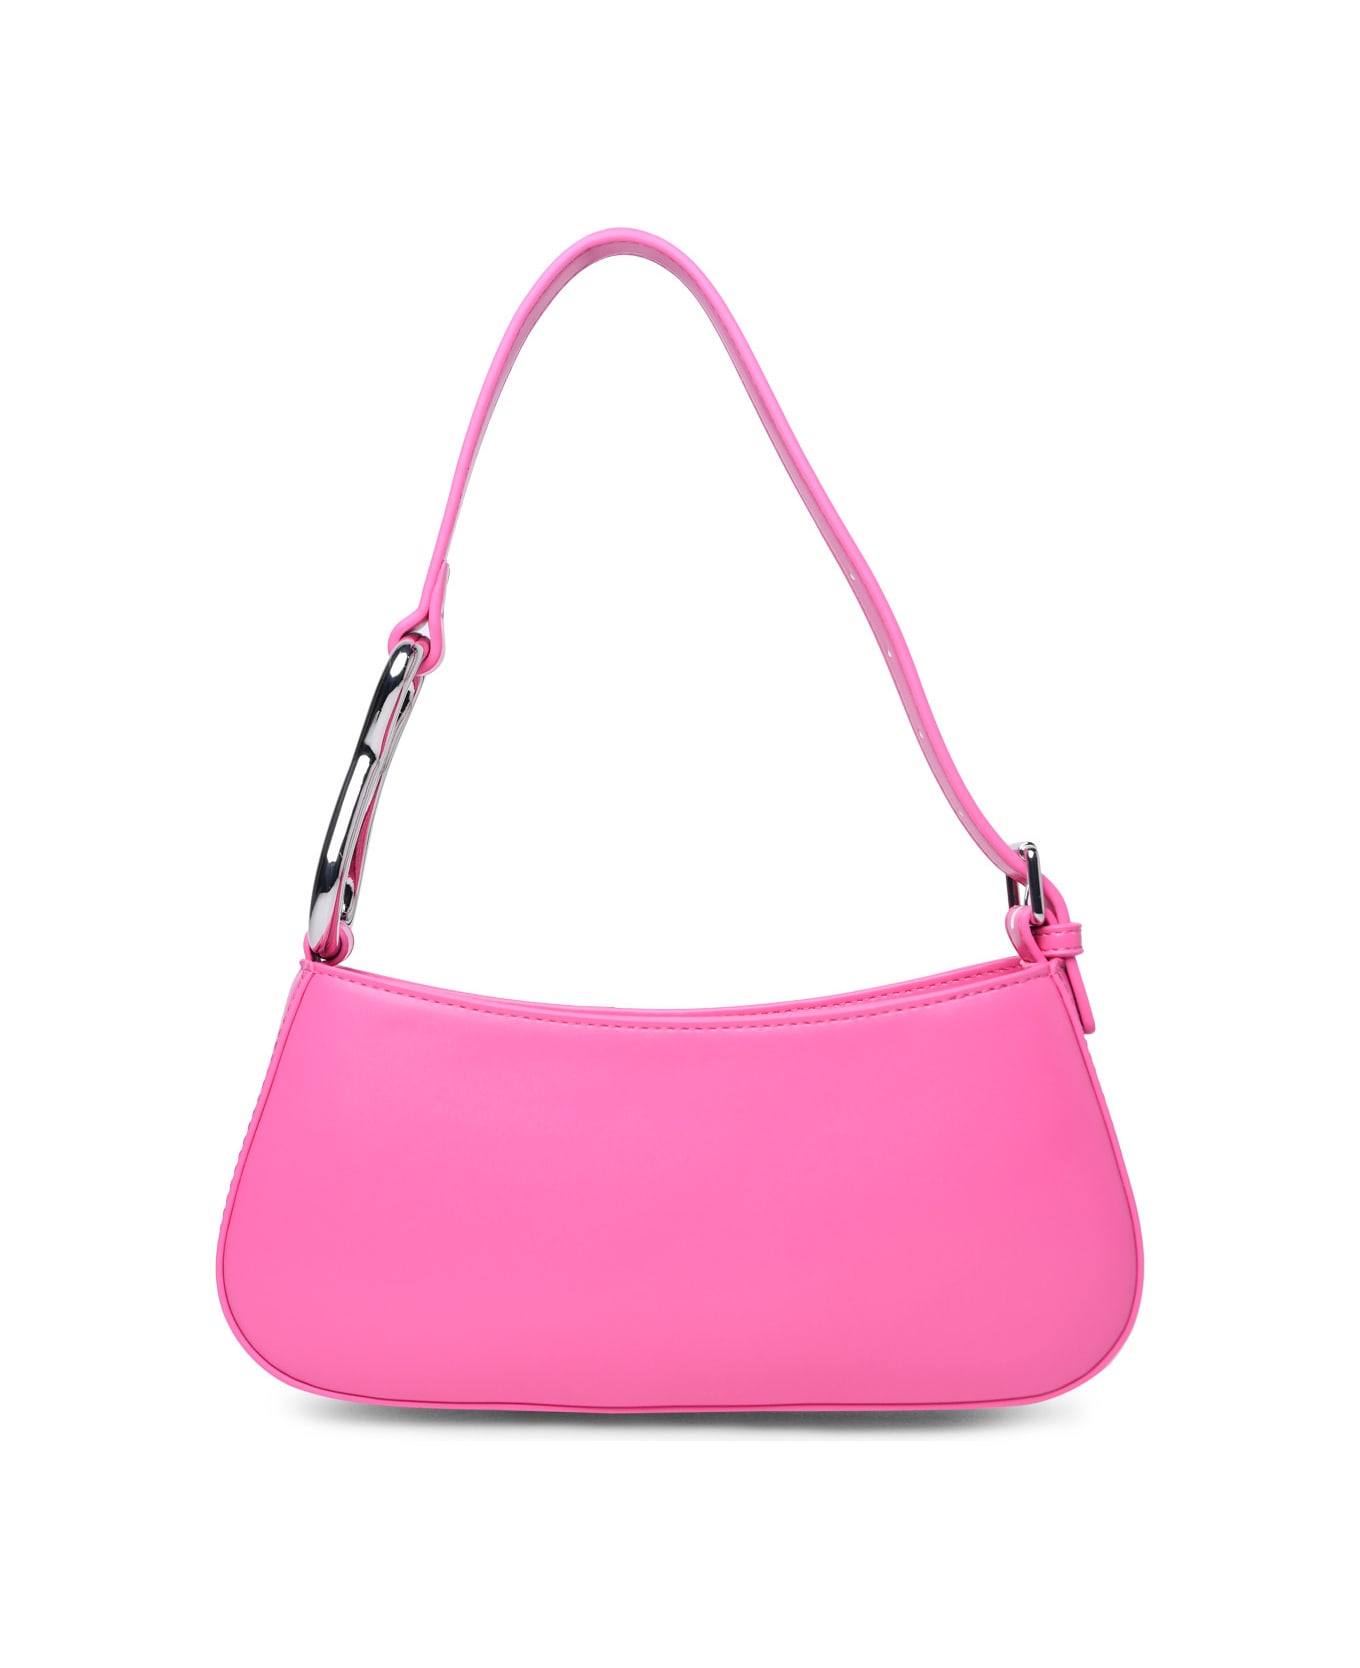 Chiara Ferragni 'cfloop' Pink Polyester Bag Chiara Ferragni - PINK